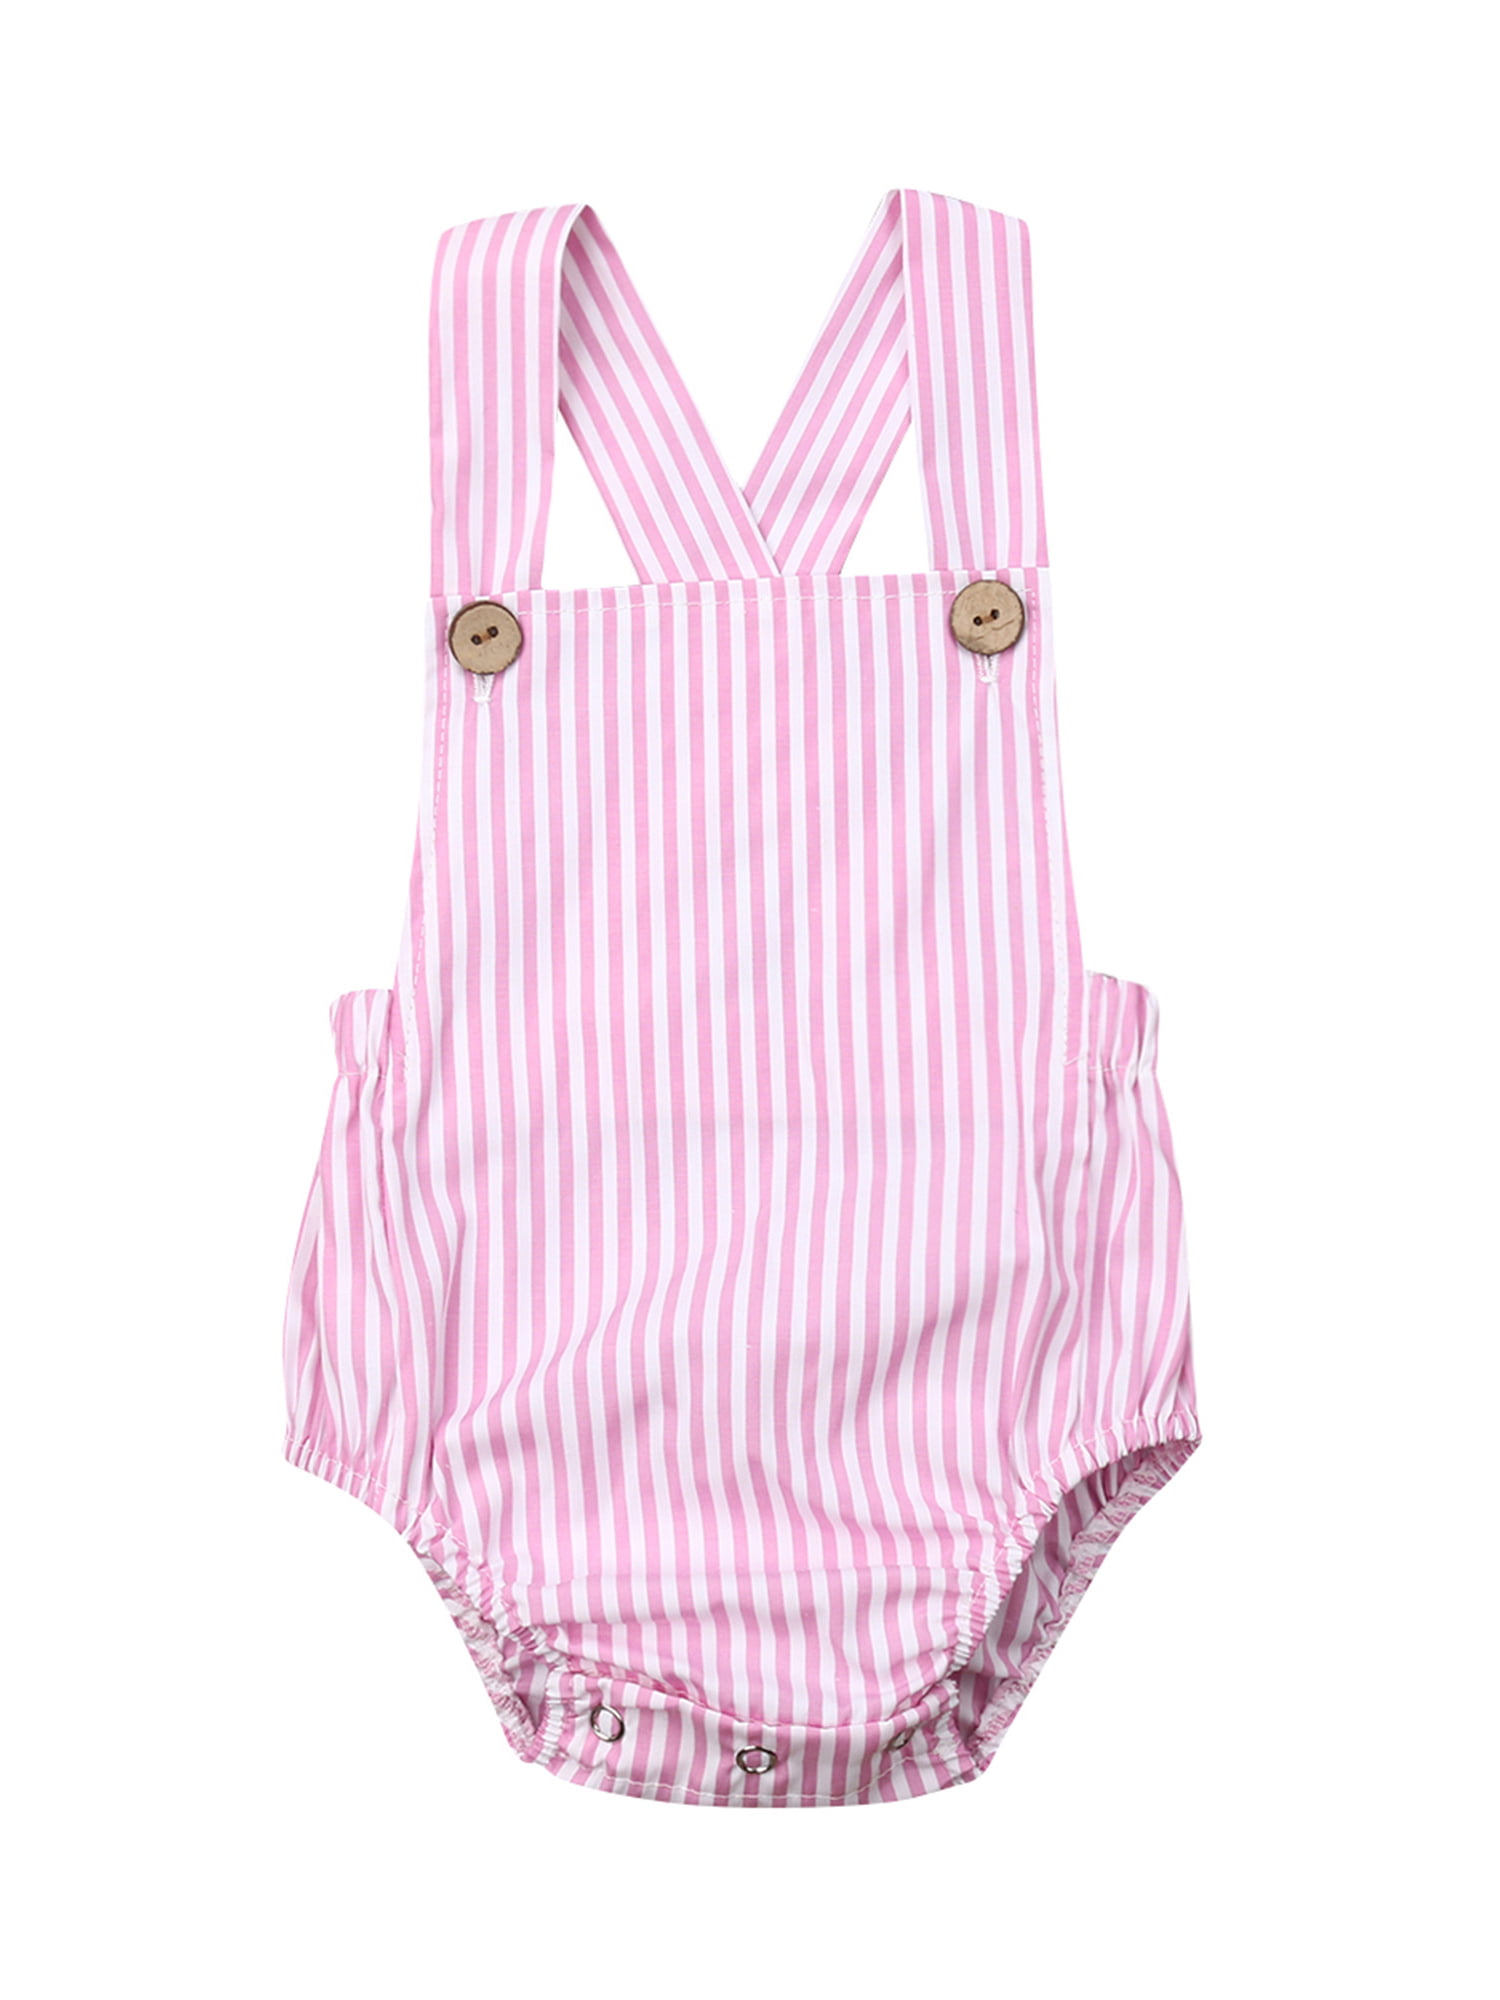 Pudcoco Newborn Baby Boys Girls Sleeveless Romper Striped Straps Overall Shorts Cross Back Bodysuit